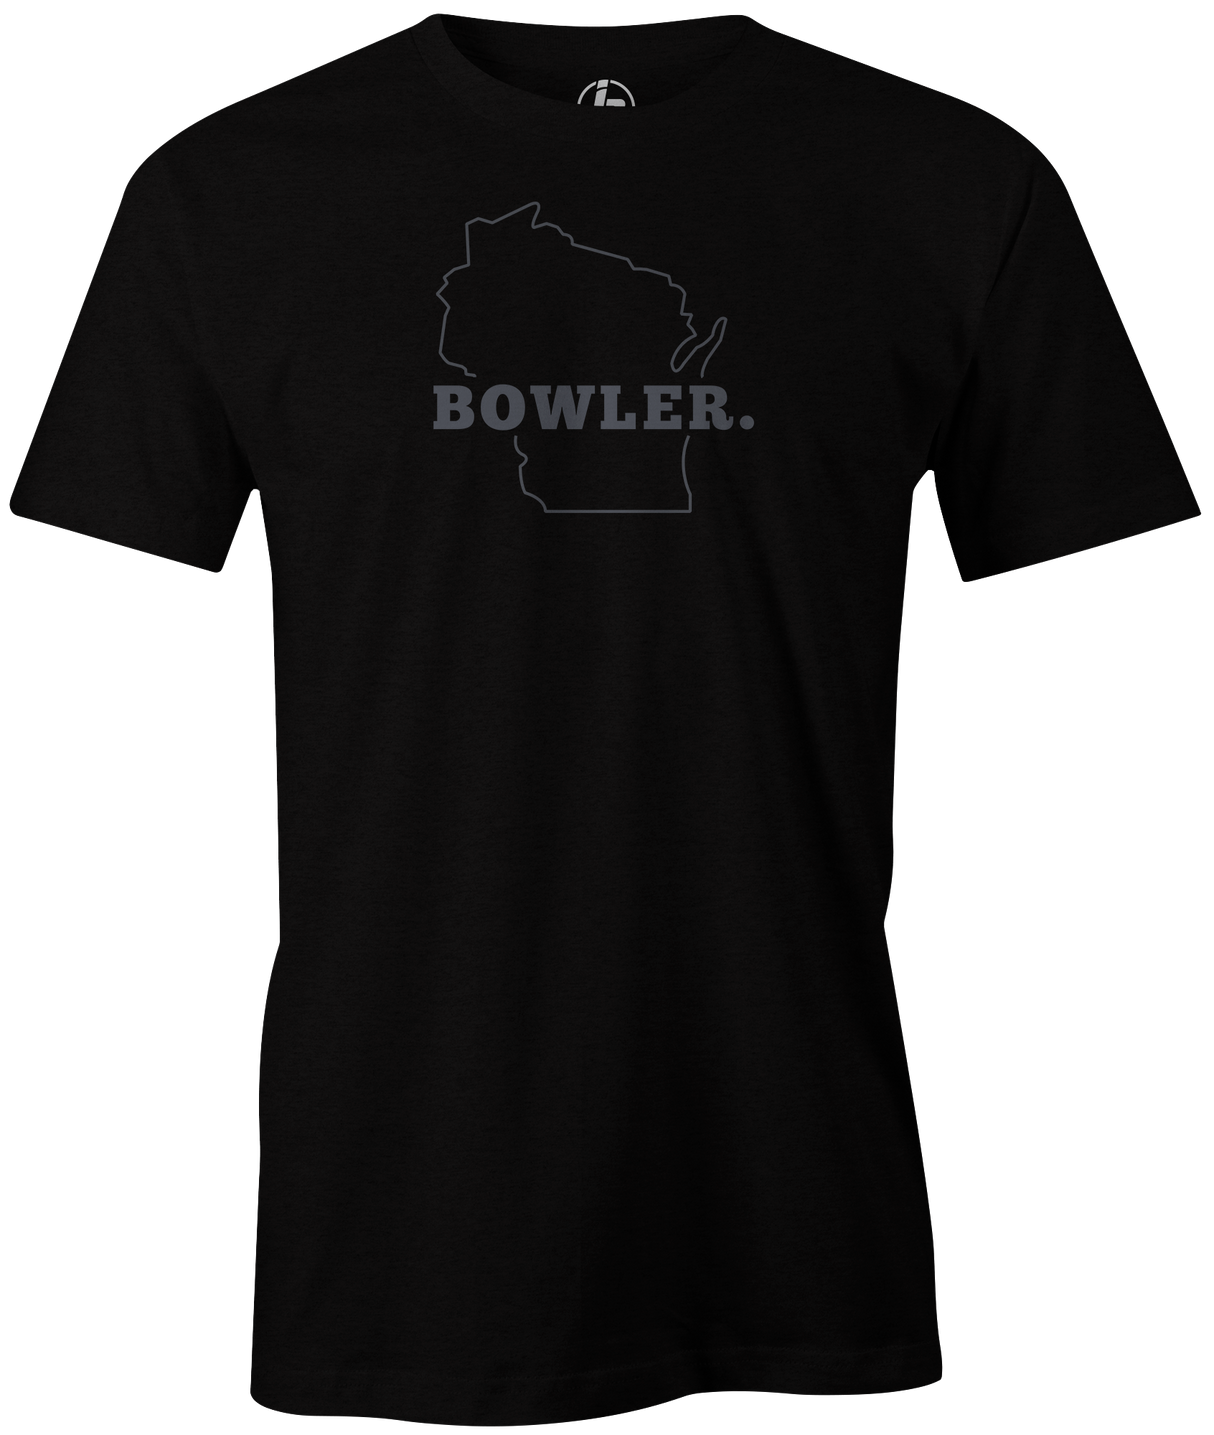 Wisconsin Men's State Bowling T-shirt, Black, Cool, novelty, tshirt, tee, tee-shirt, tee shirt, teeshirt, team, comfortable